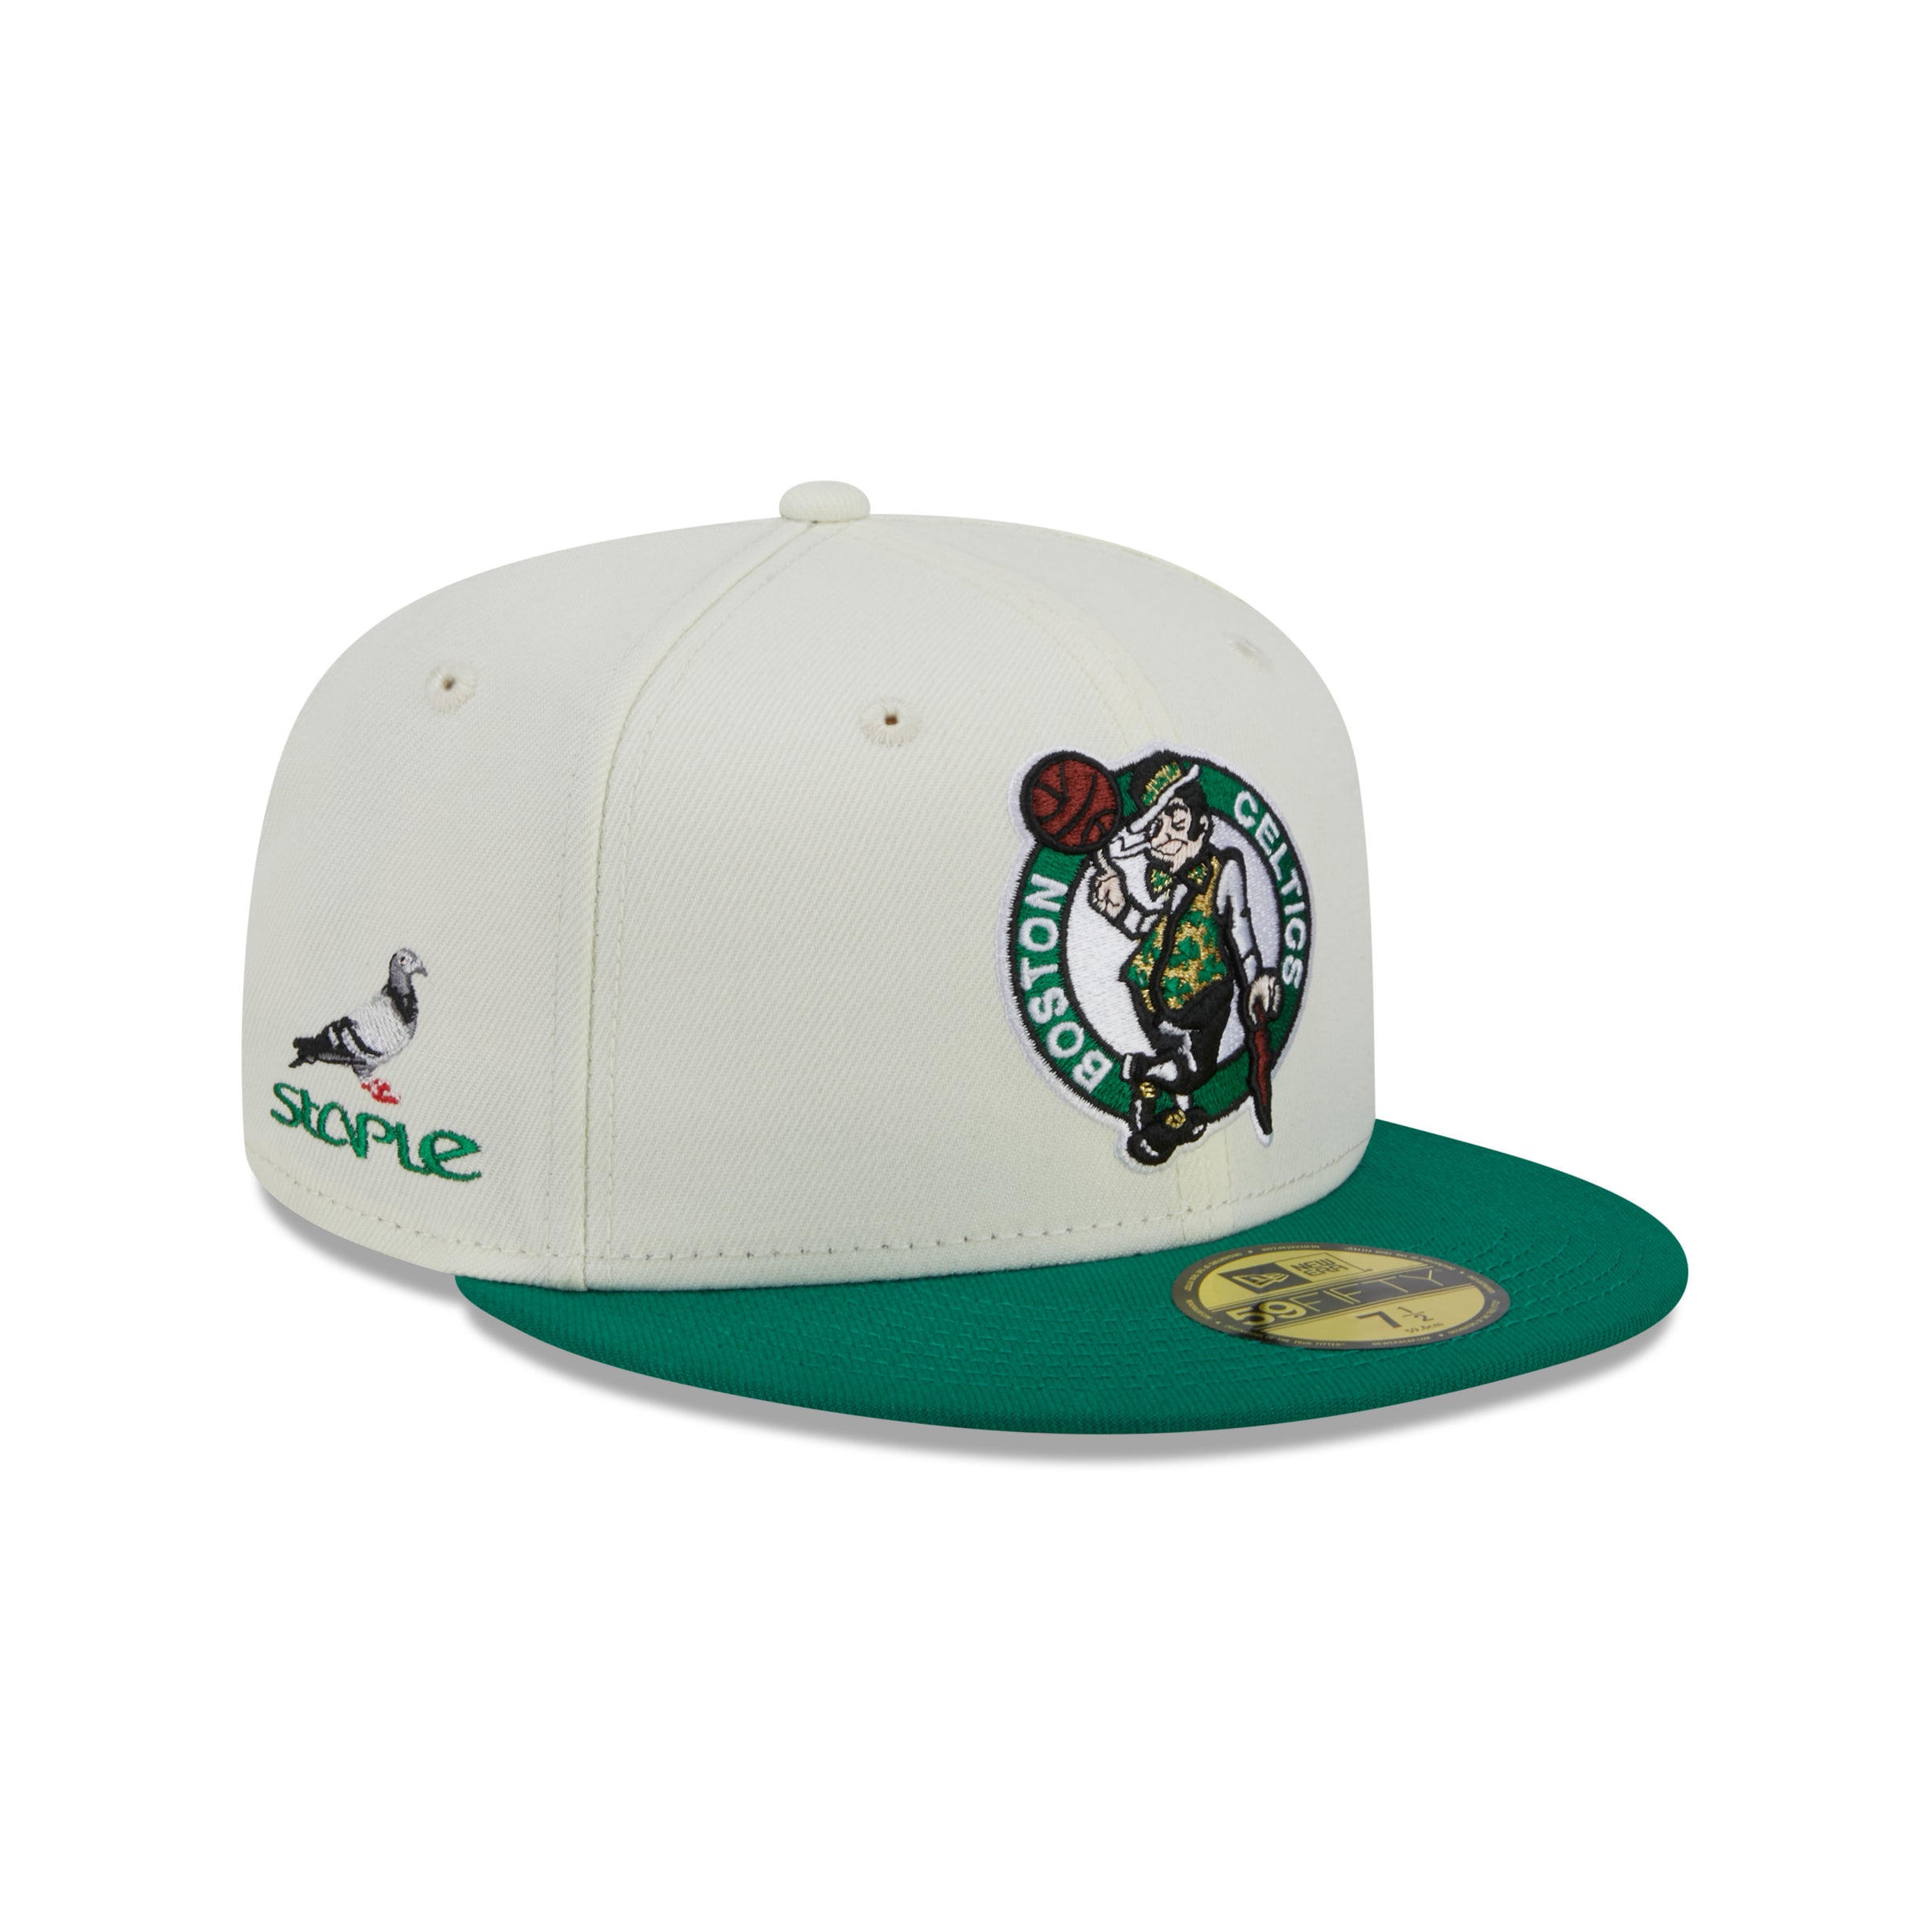 New Era Hoodie - Boston Celtics S / Grey / Green / Black / Boston Celtics